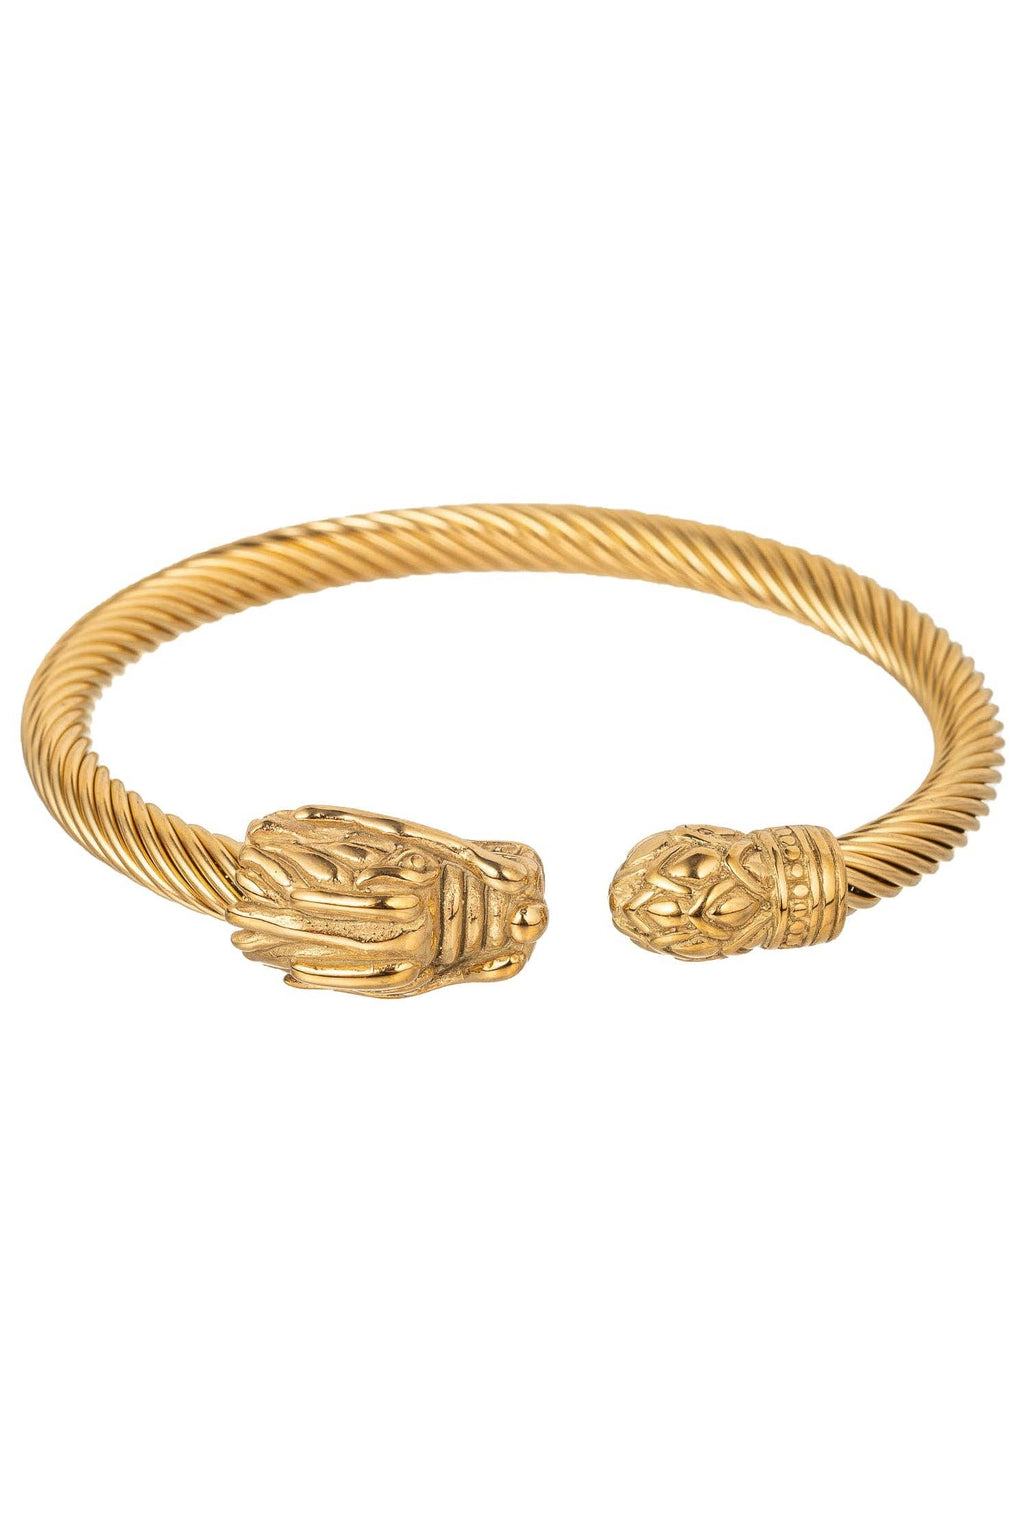 Double Dragon Head Gold Titanium Bracelet Cuff